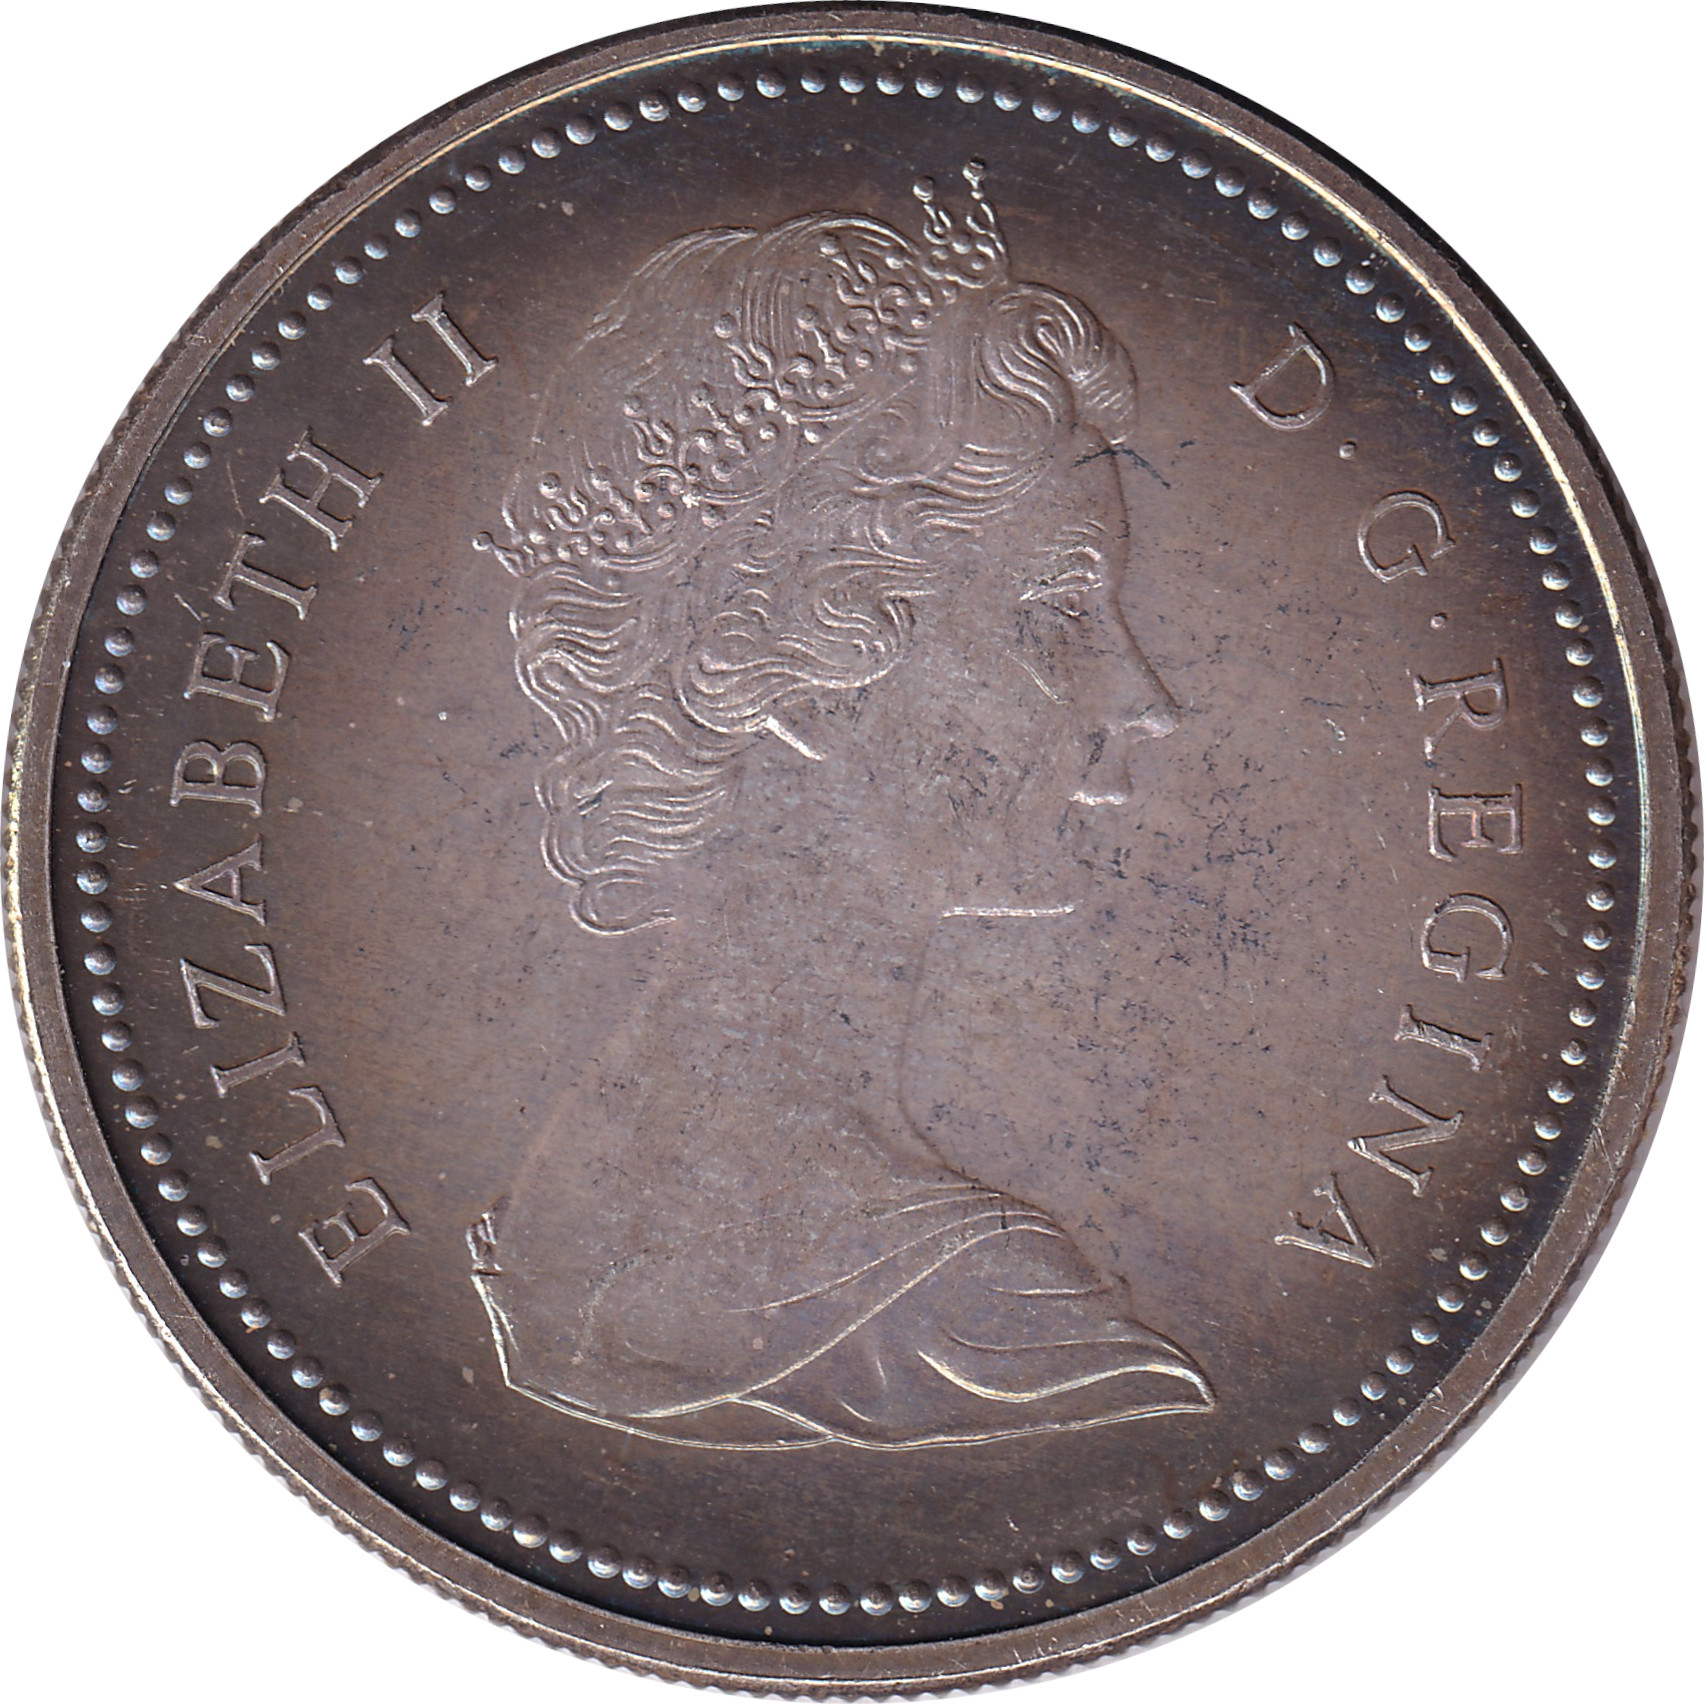 1 dollar - Elizabeth II - Mature bust - Voyageur